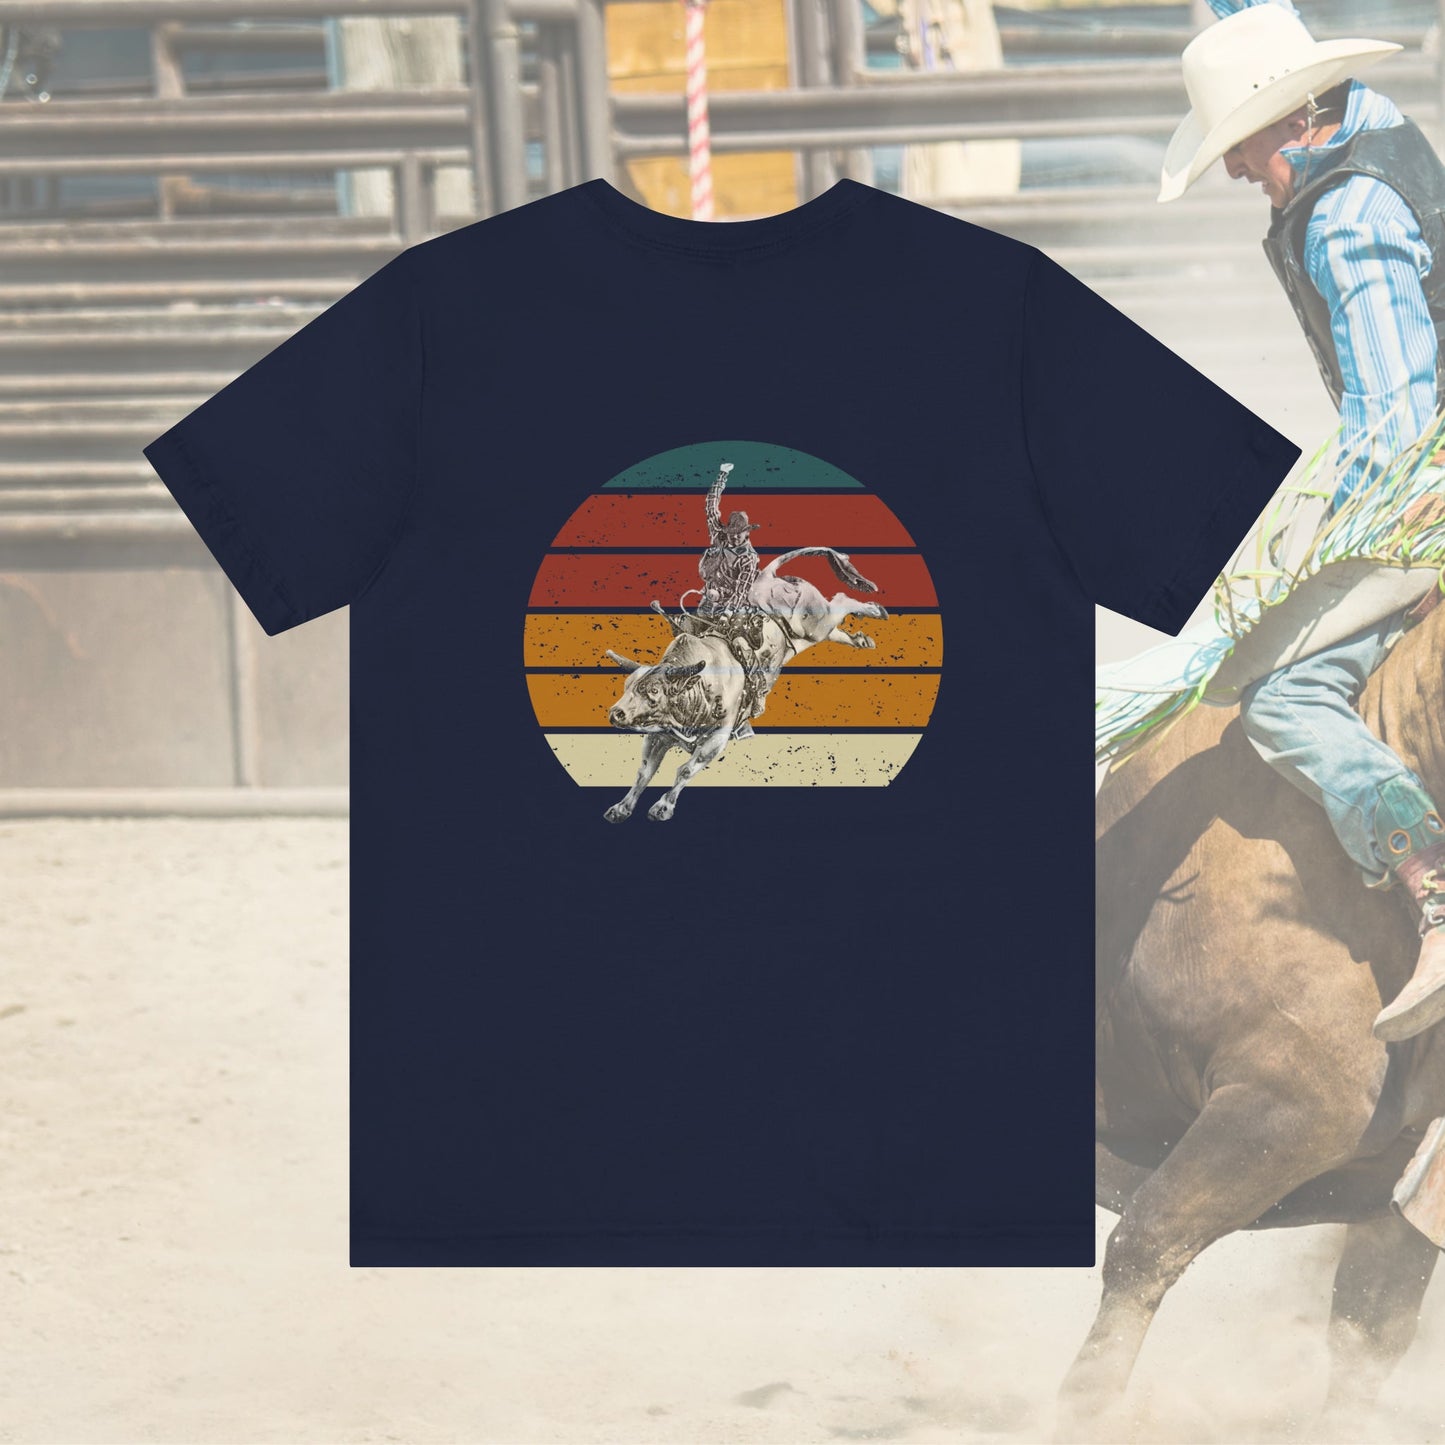 Rodeo Bull Rider 2 sided T-shirt, Rodeo Cowboy Crewneck Shirt, Rodeo Western Cowboy - FlooredByArt